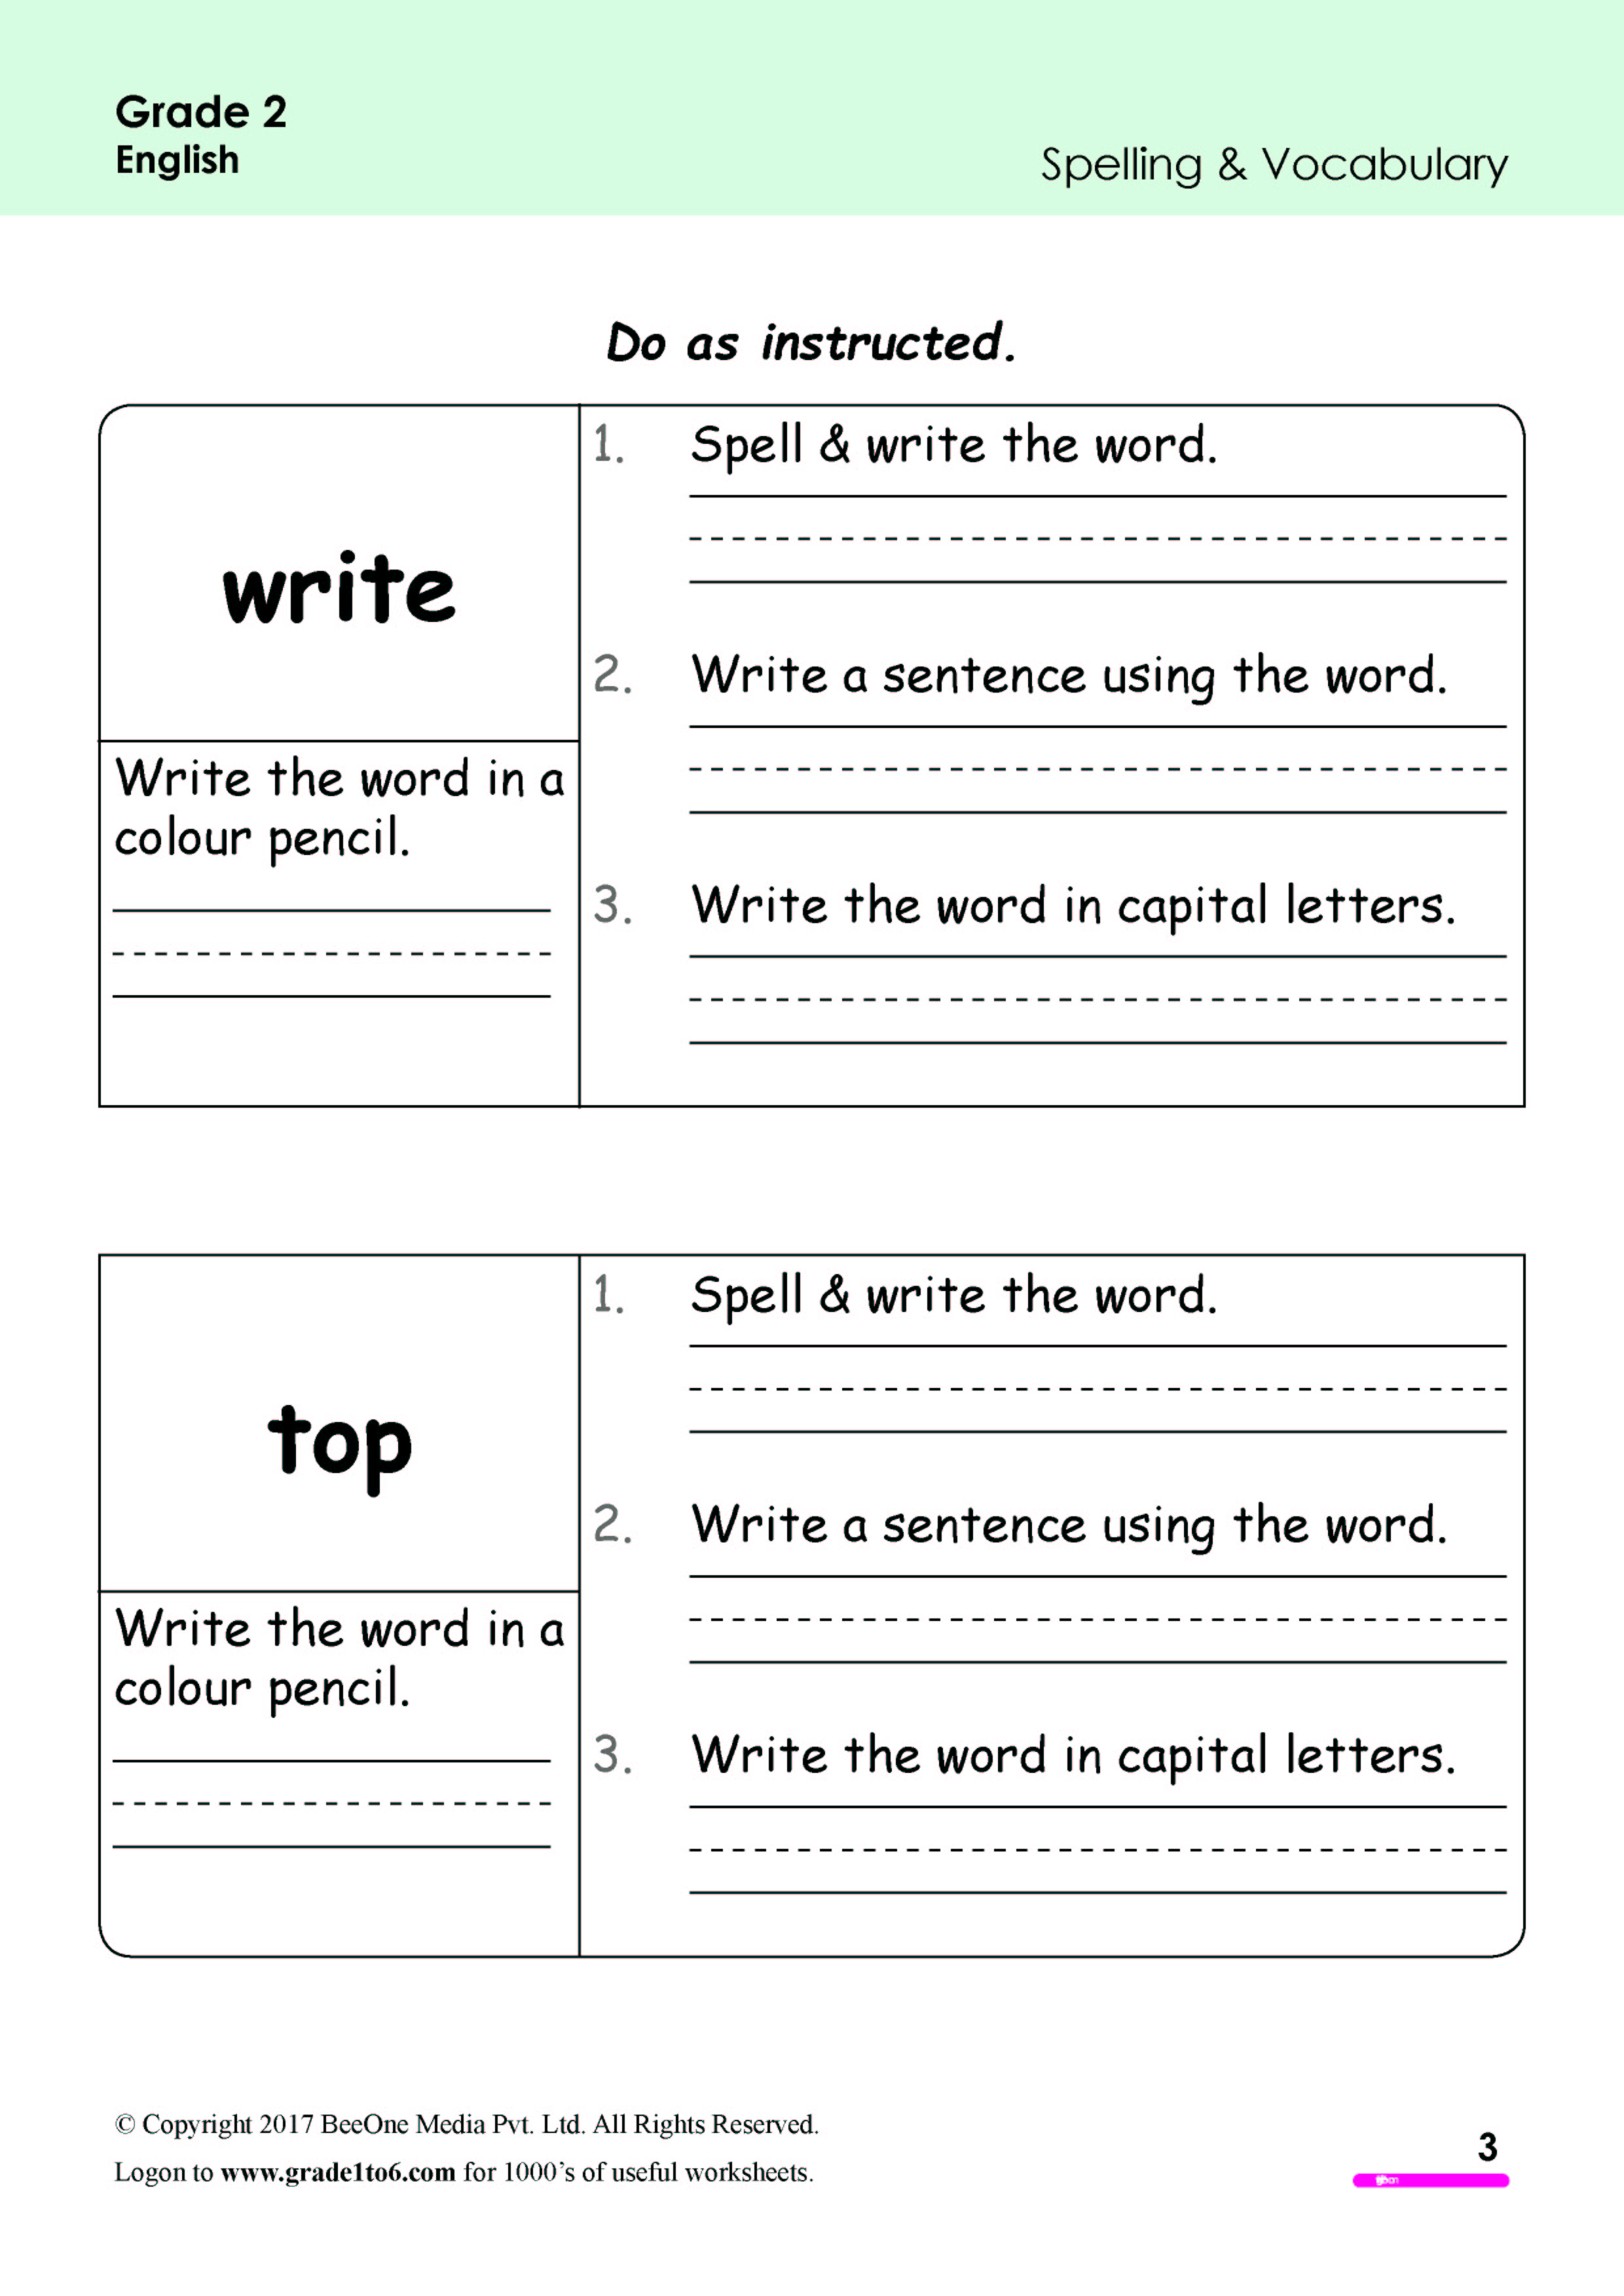 spellings worksheets 2nd grade www grade1to6 com